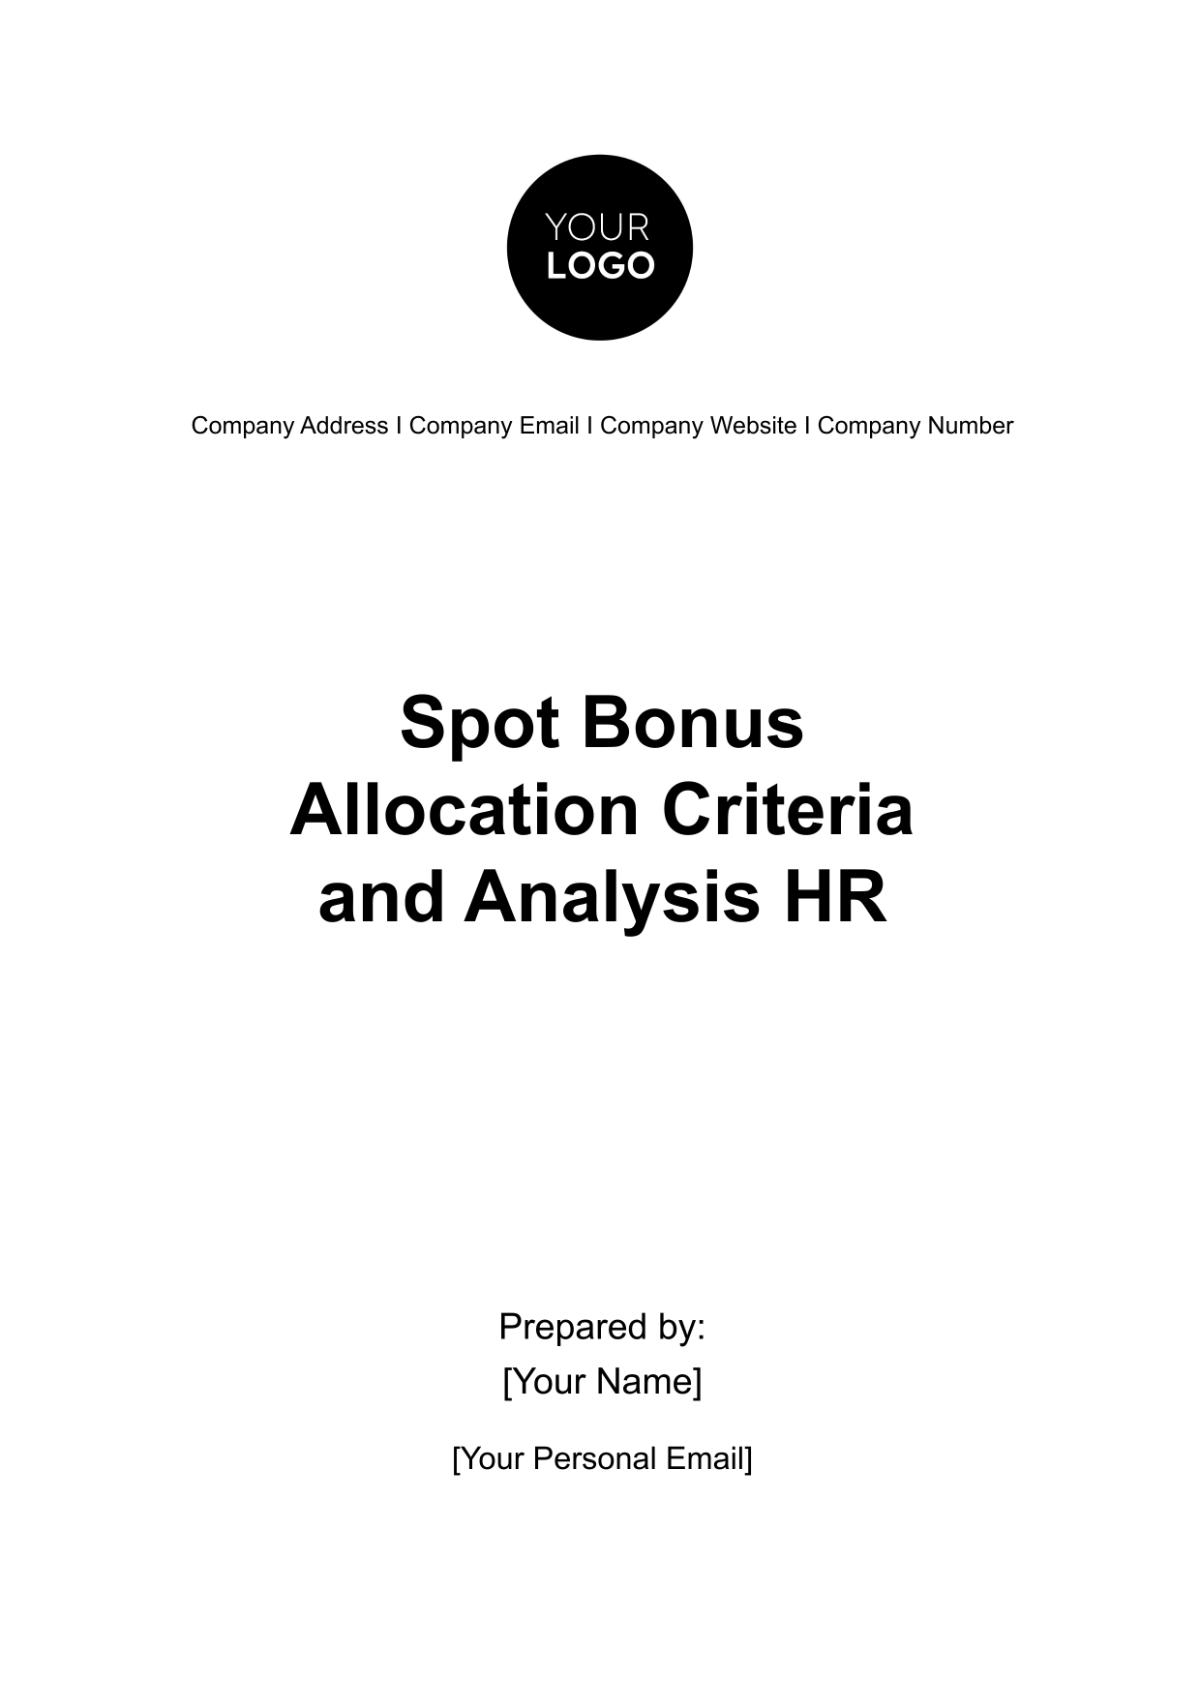 Free Spot Bonus Allocation Criteria and Analysis HR Template